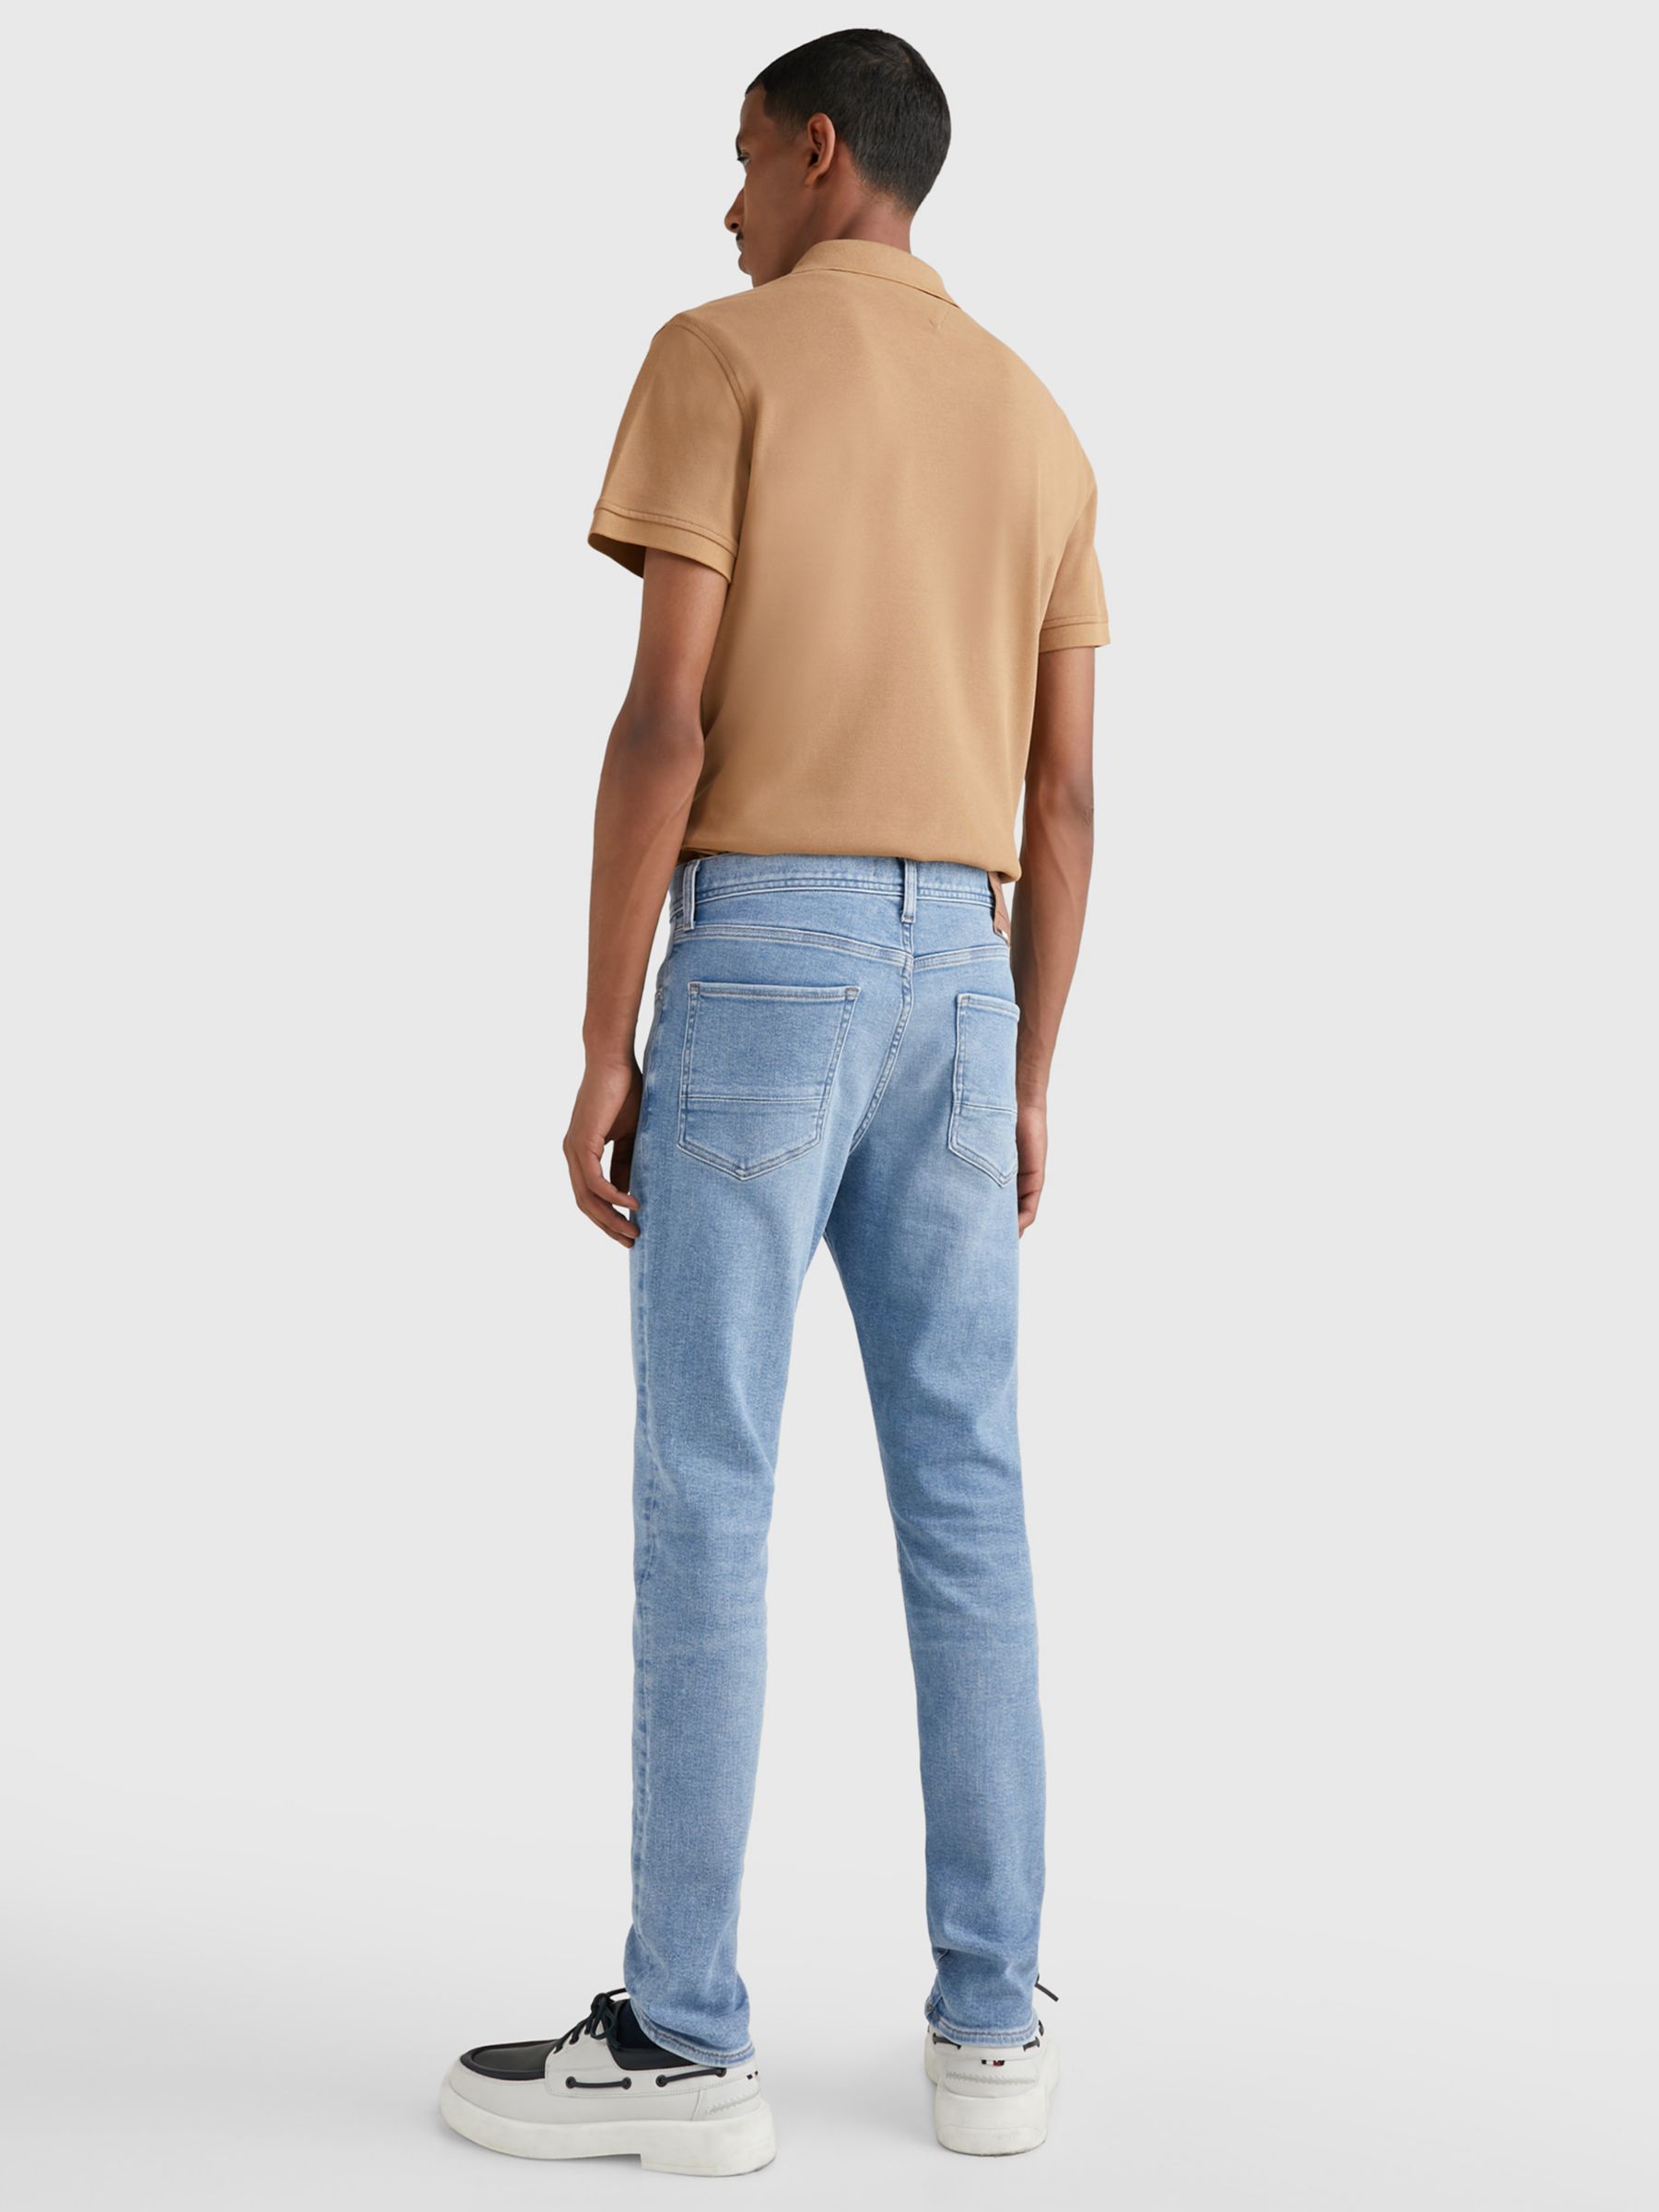 Tommy Hilfiger Extra Slim Layton Jeans, Blue, 36L